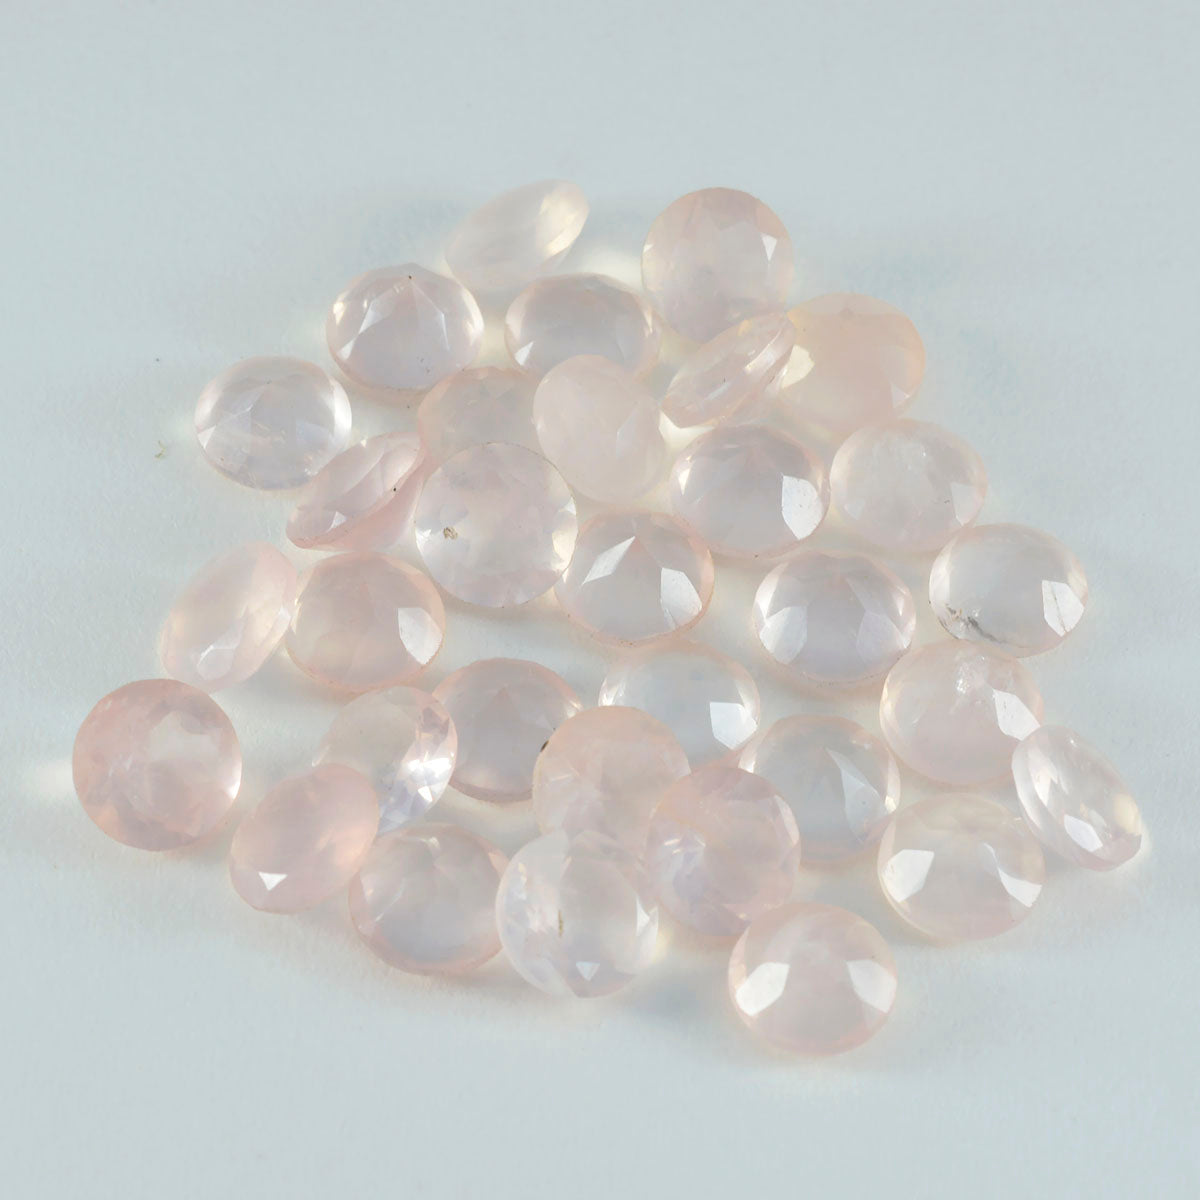 Riyogems 1PC Pink Rose Quartz Faceted 7x7 mm Round Shape Good Quality Loose Gems